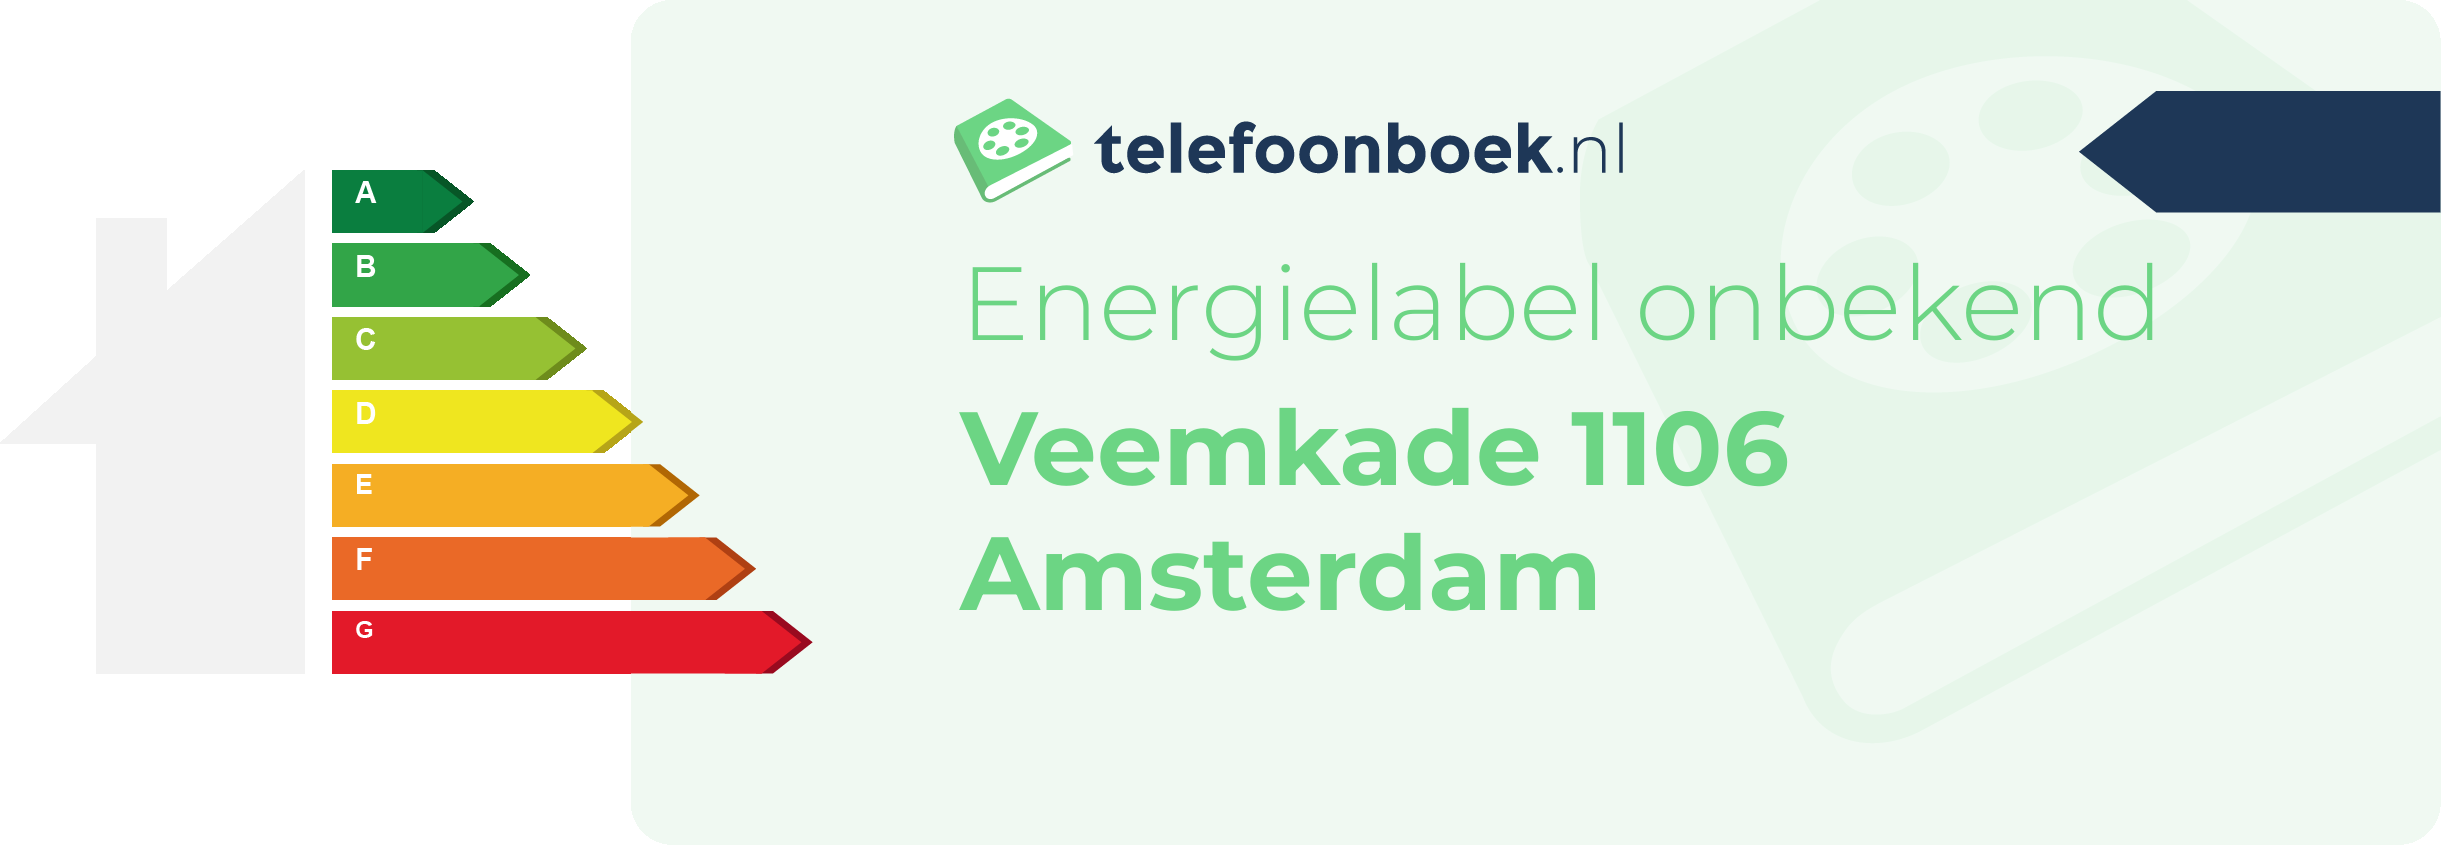 Energielabel Veemkade 1106 Amsterdam